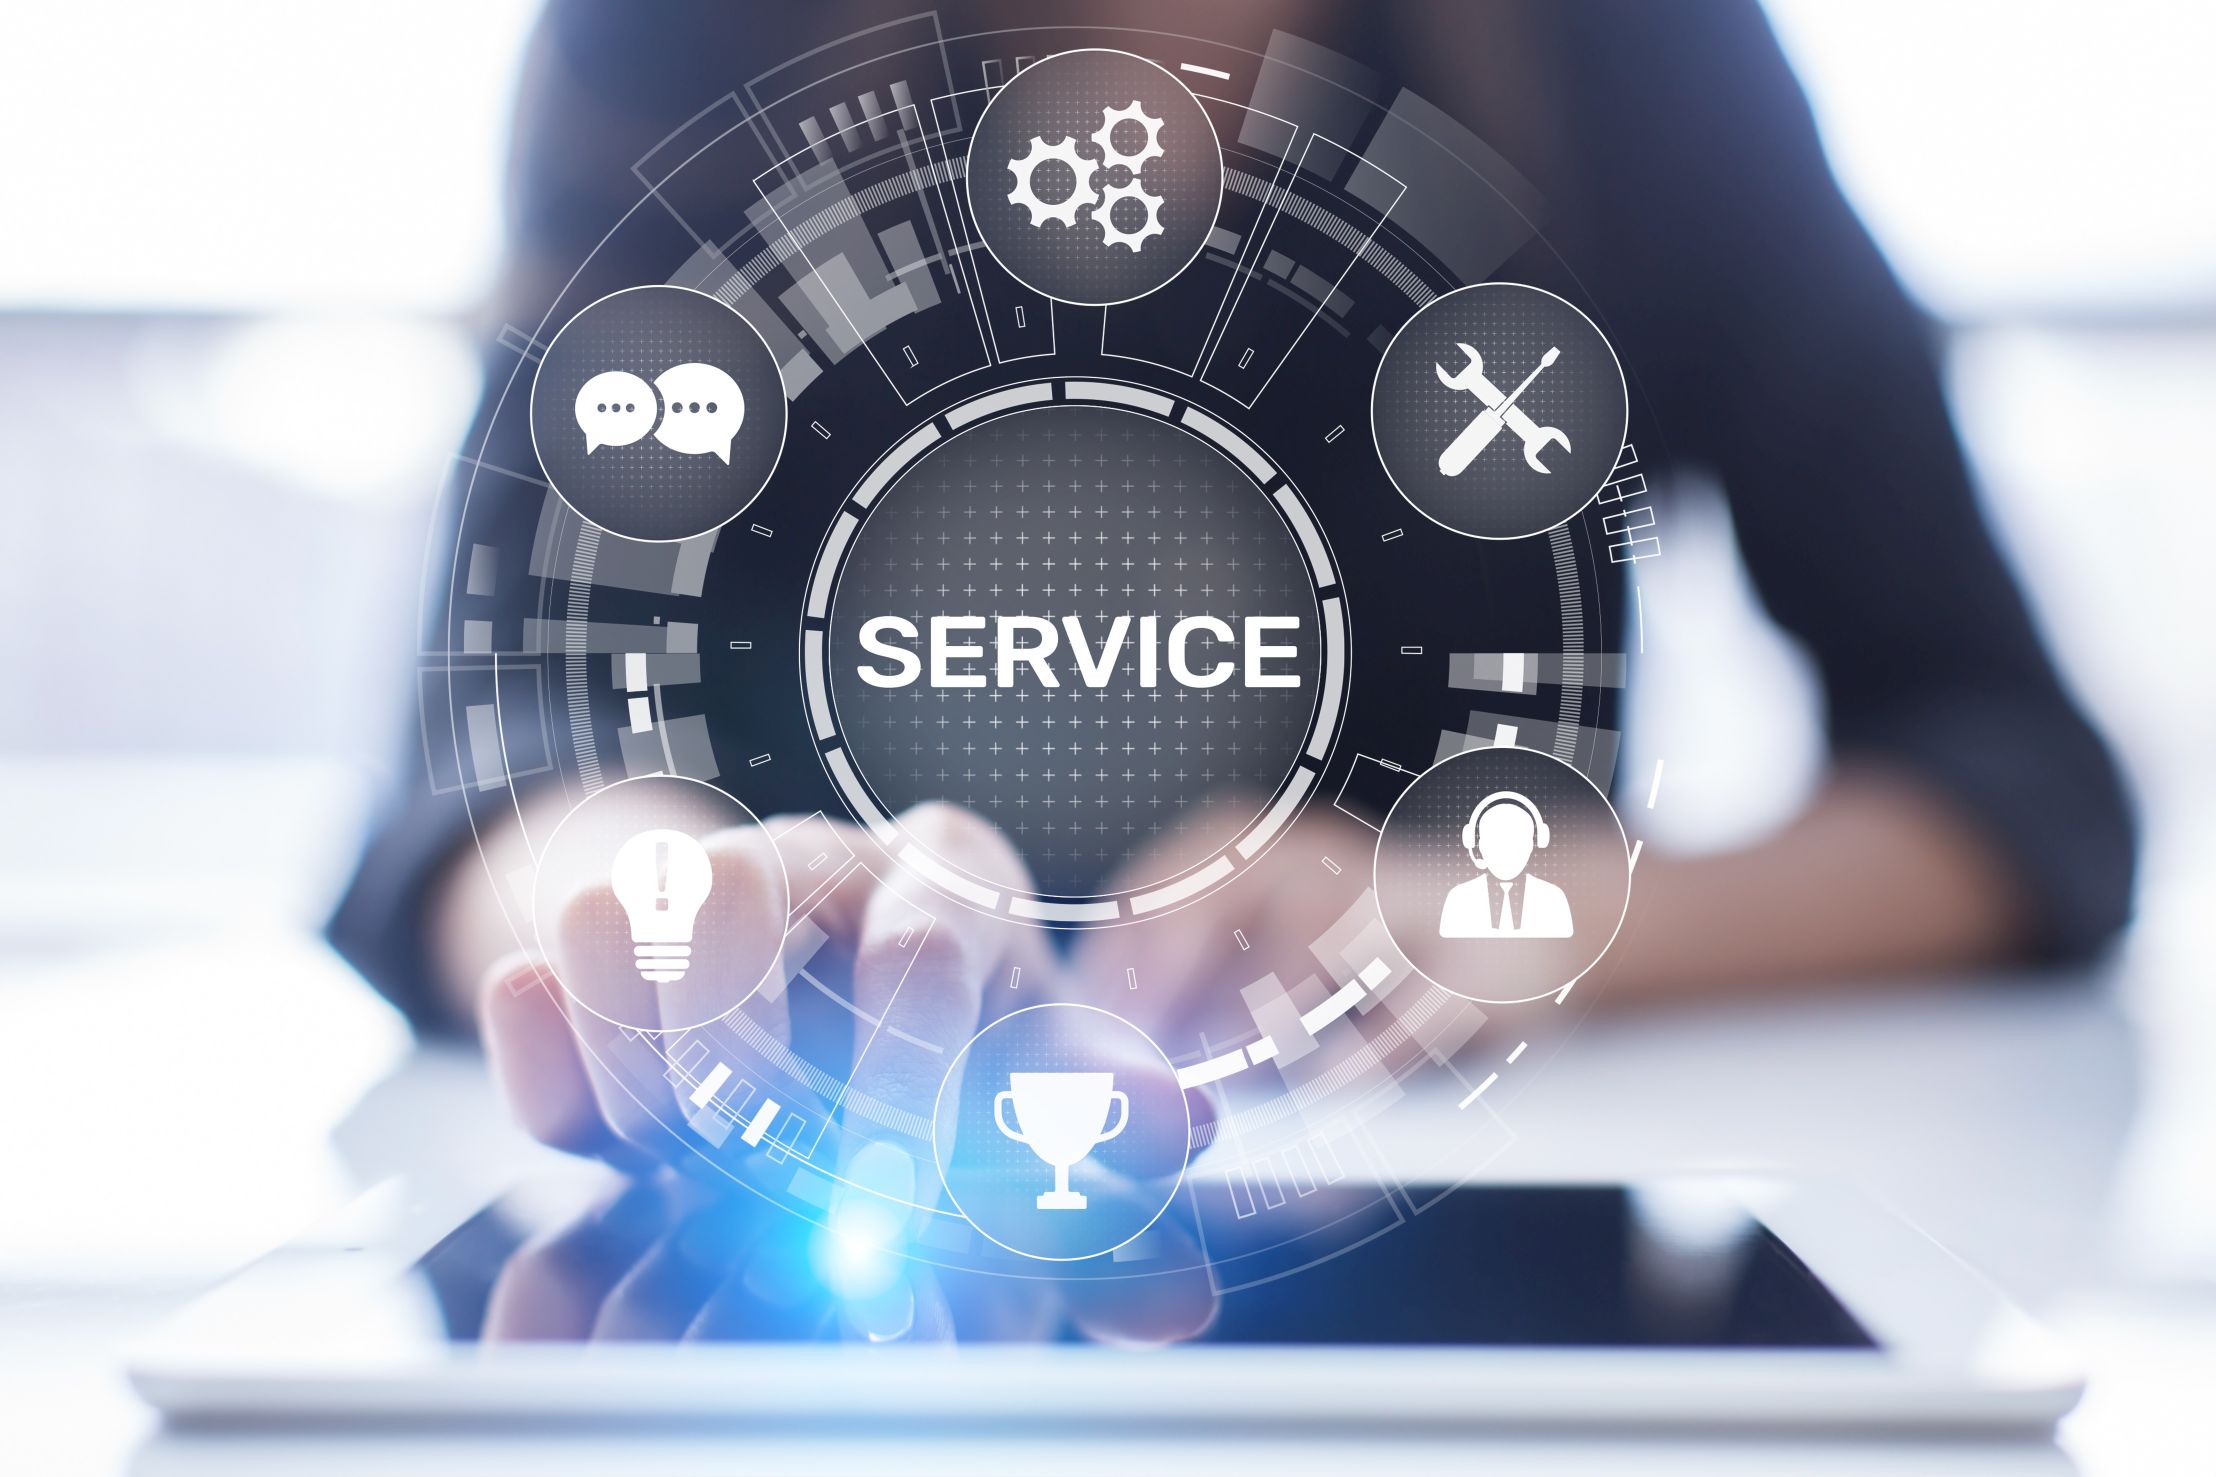 Service support customer help call center Business technology button on virtual screen